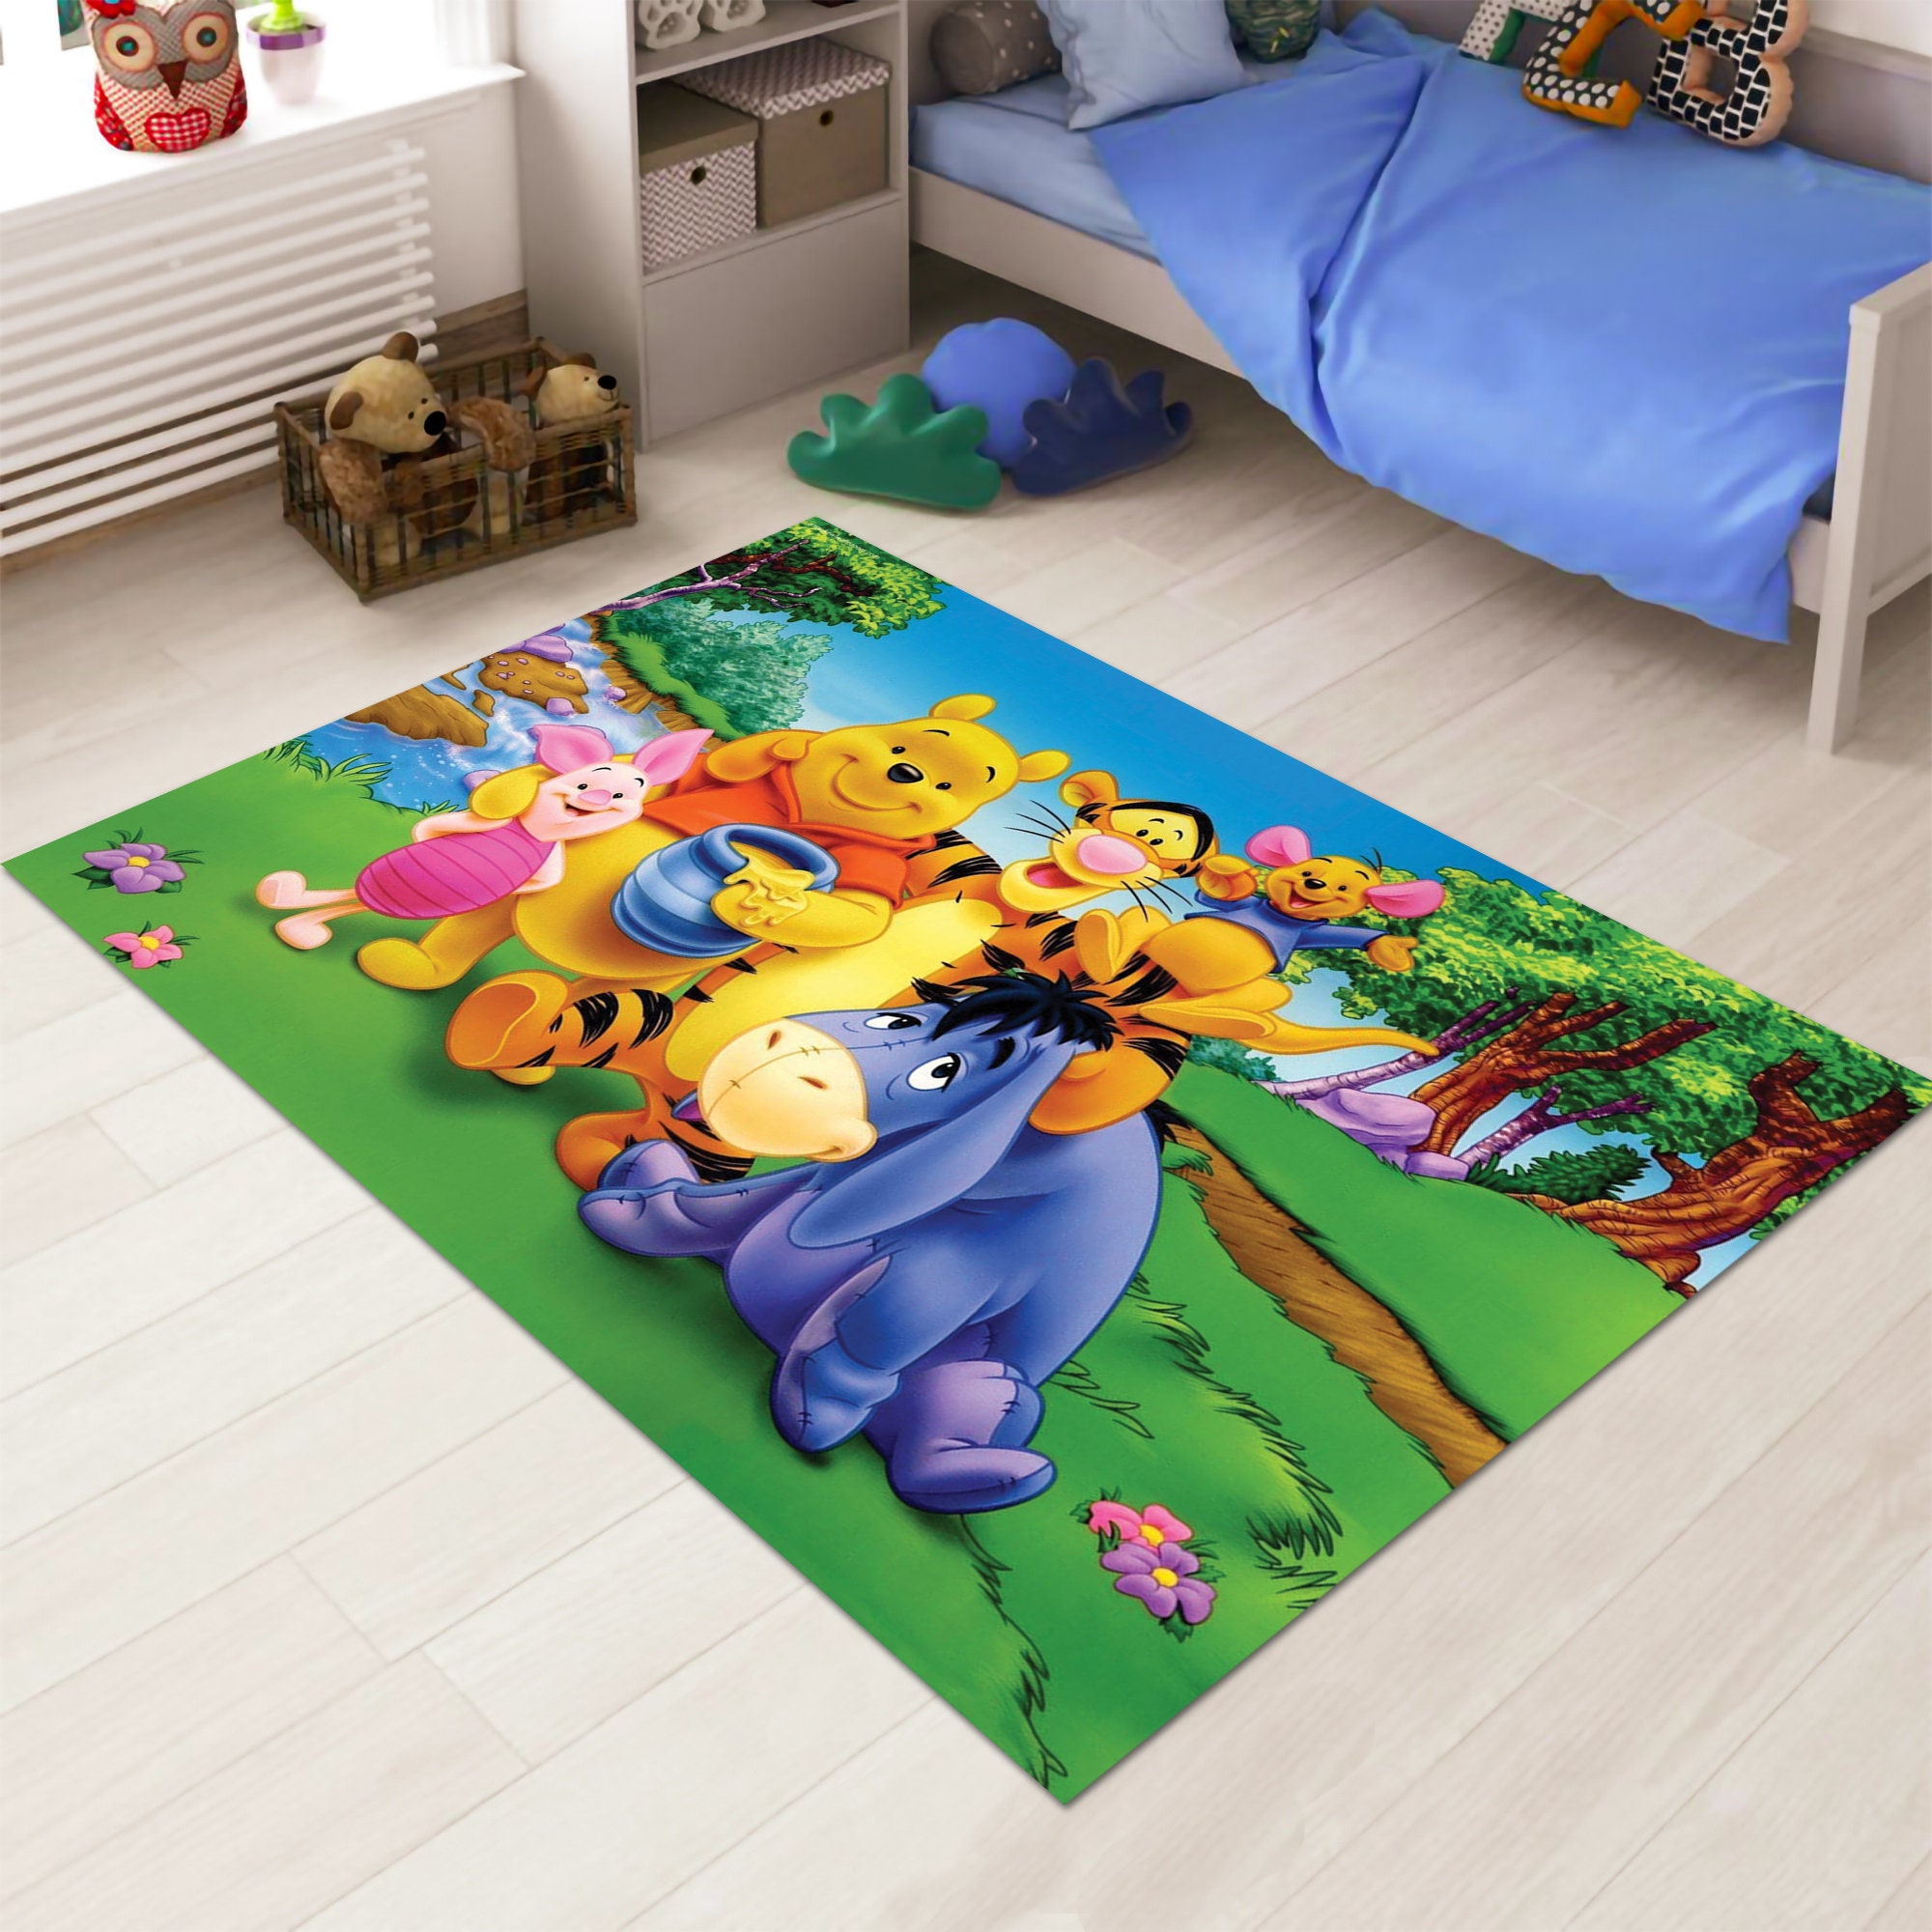 Discover Winnie the Pooh Rug, Characters Rug,Cute Rug,Cartoon Rug,Colorful Rug,Kids Room Rug,Nursery Decor,Bedroom Rug,Kids Decor